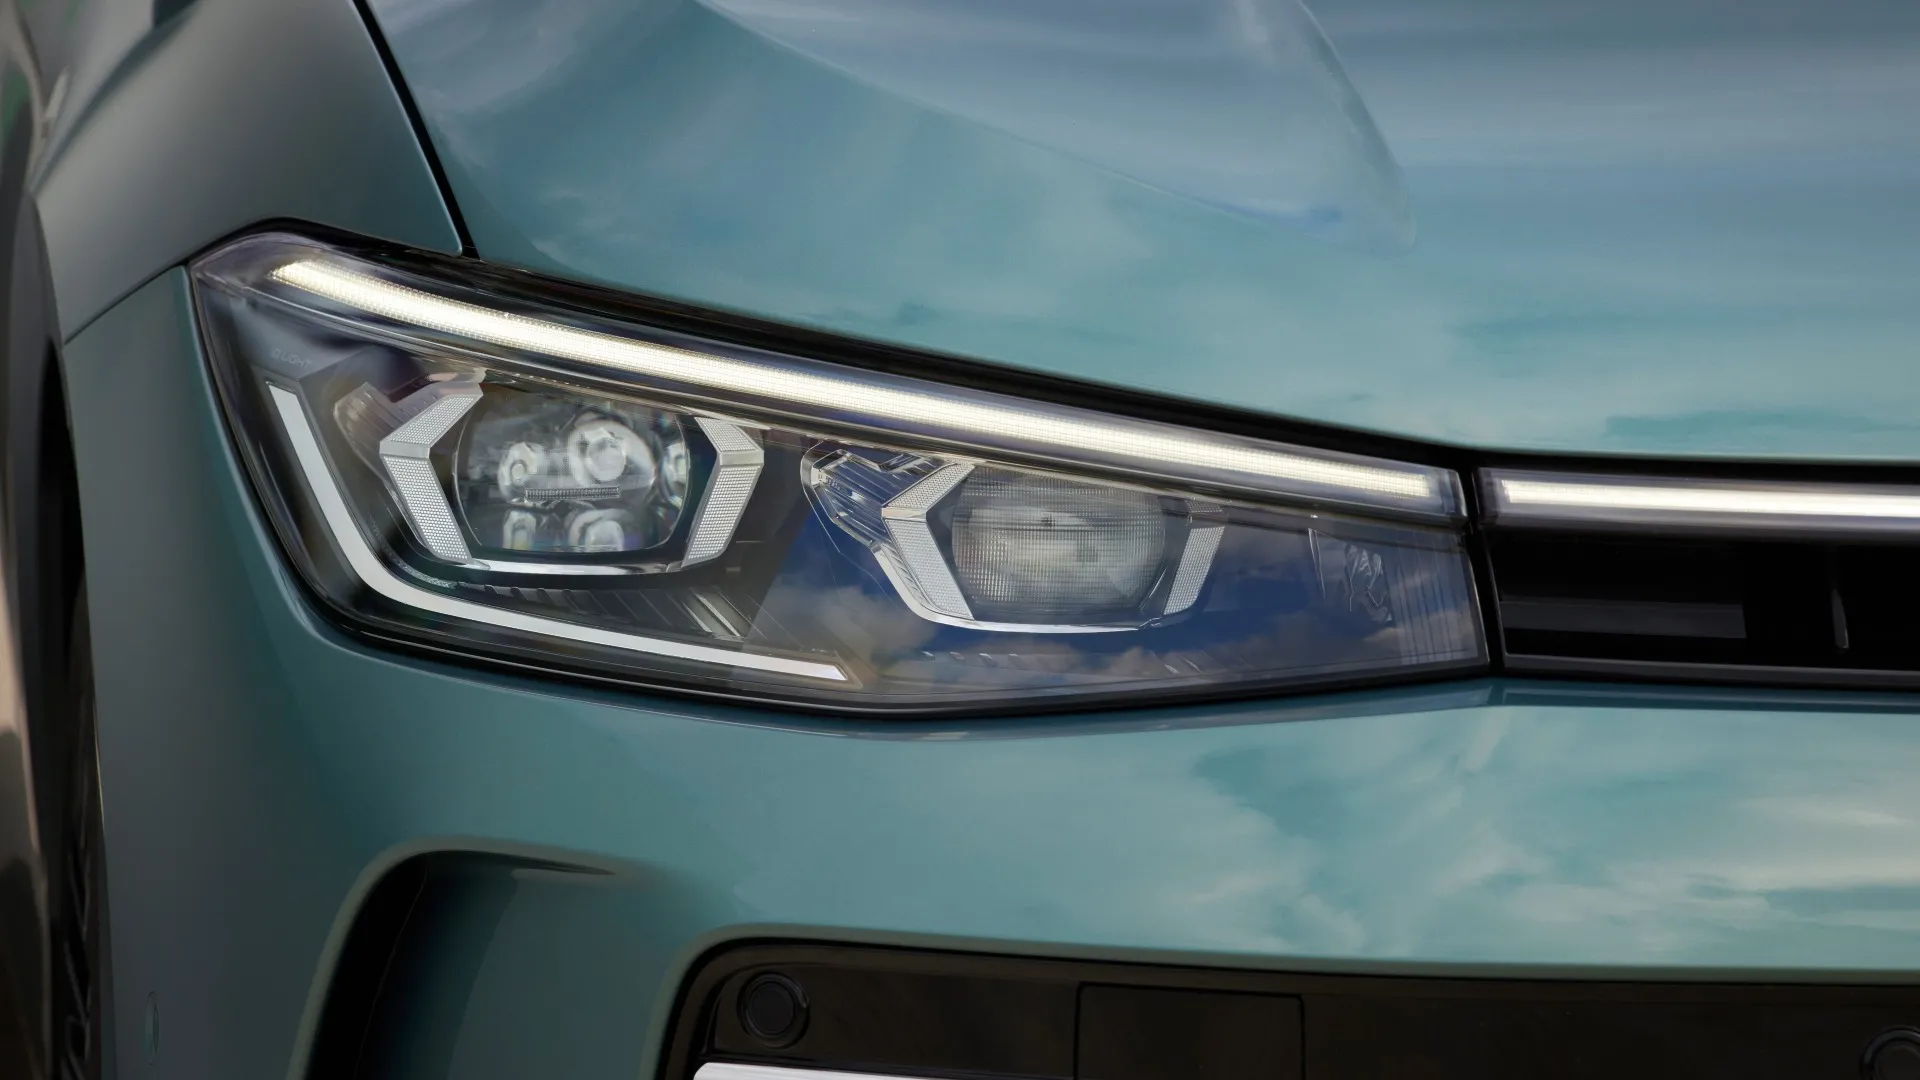 Coche del Día: Volkswagen Passat 2.5 TDI V6 (B5) - espíritu RACER